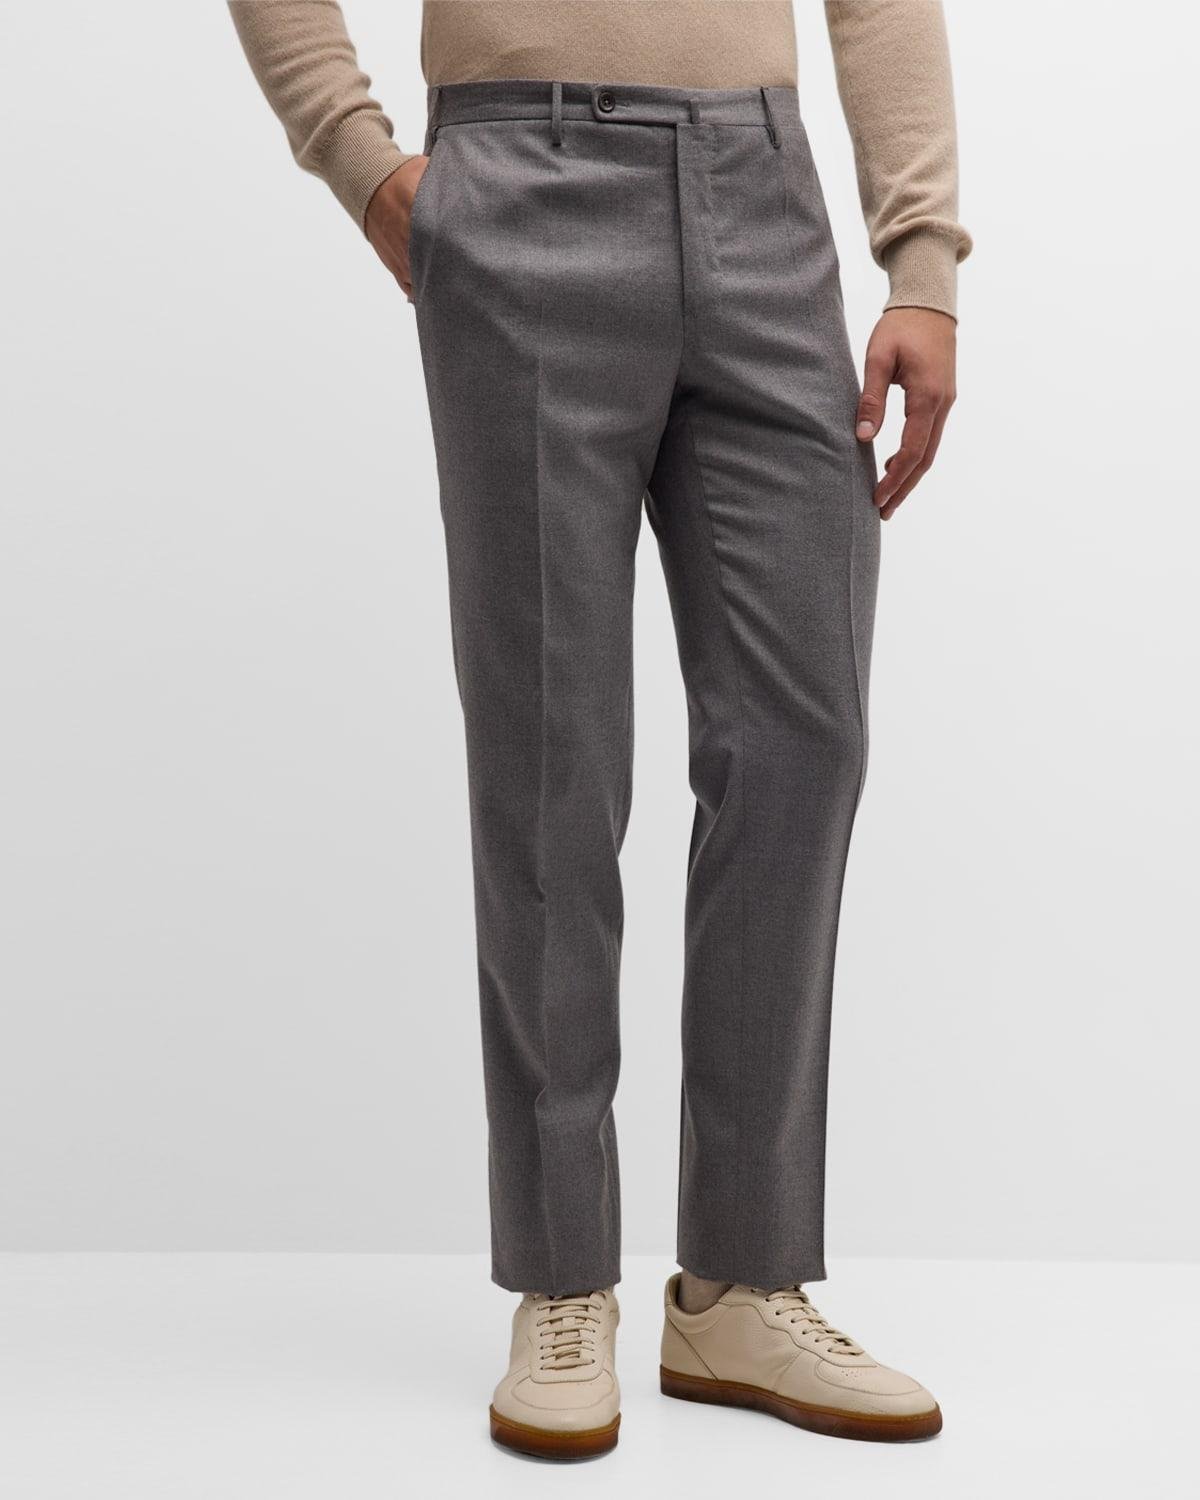 Men's Super 100s Wool Dress Pants by INCOTEX